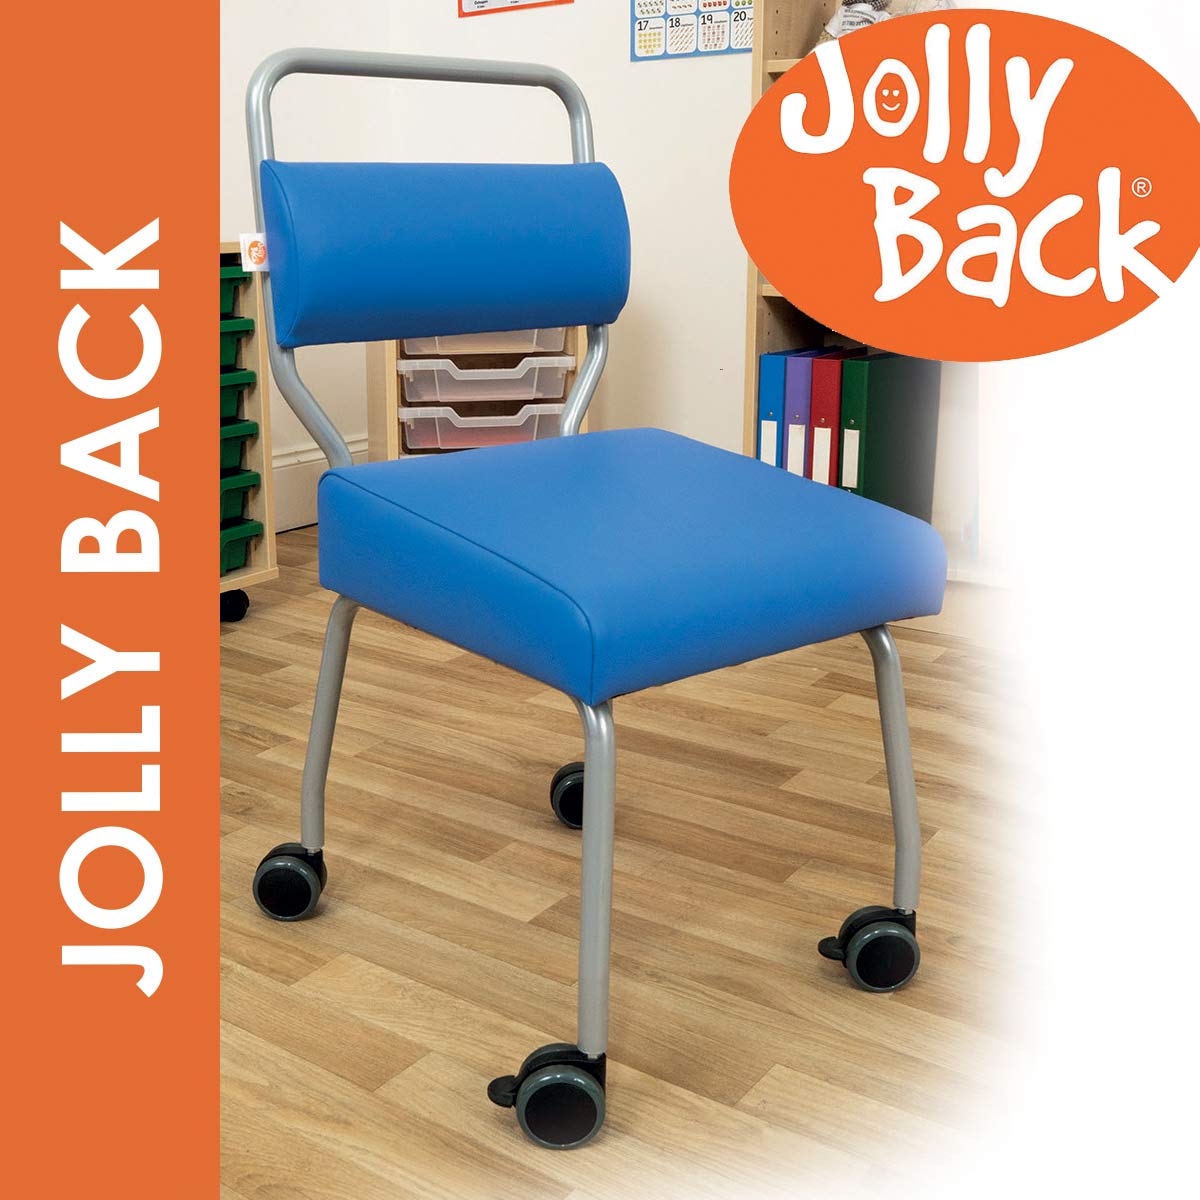 Jolly Back Chair